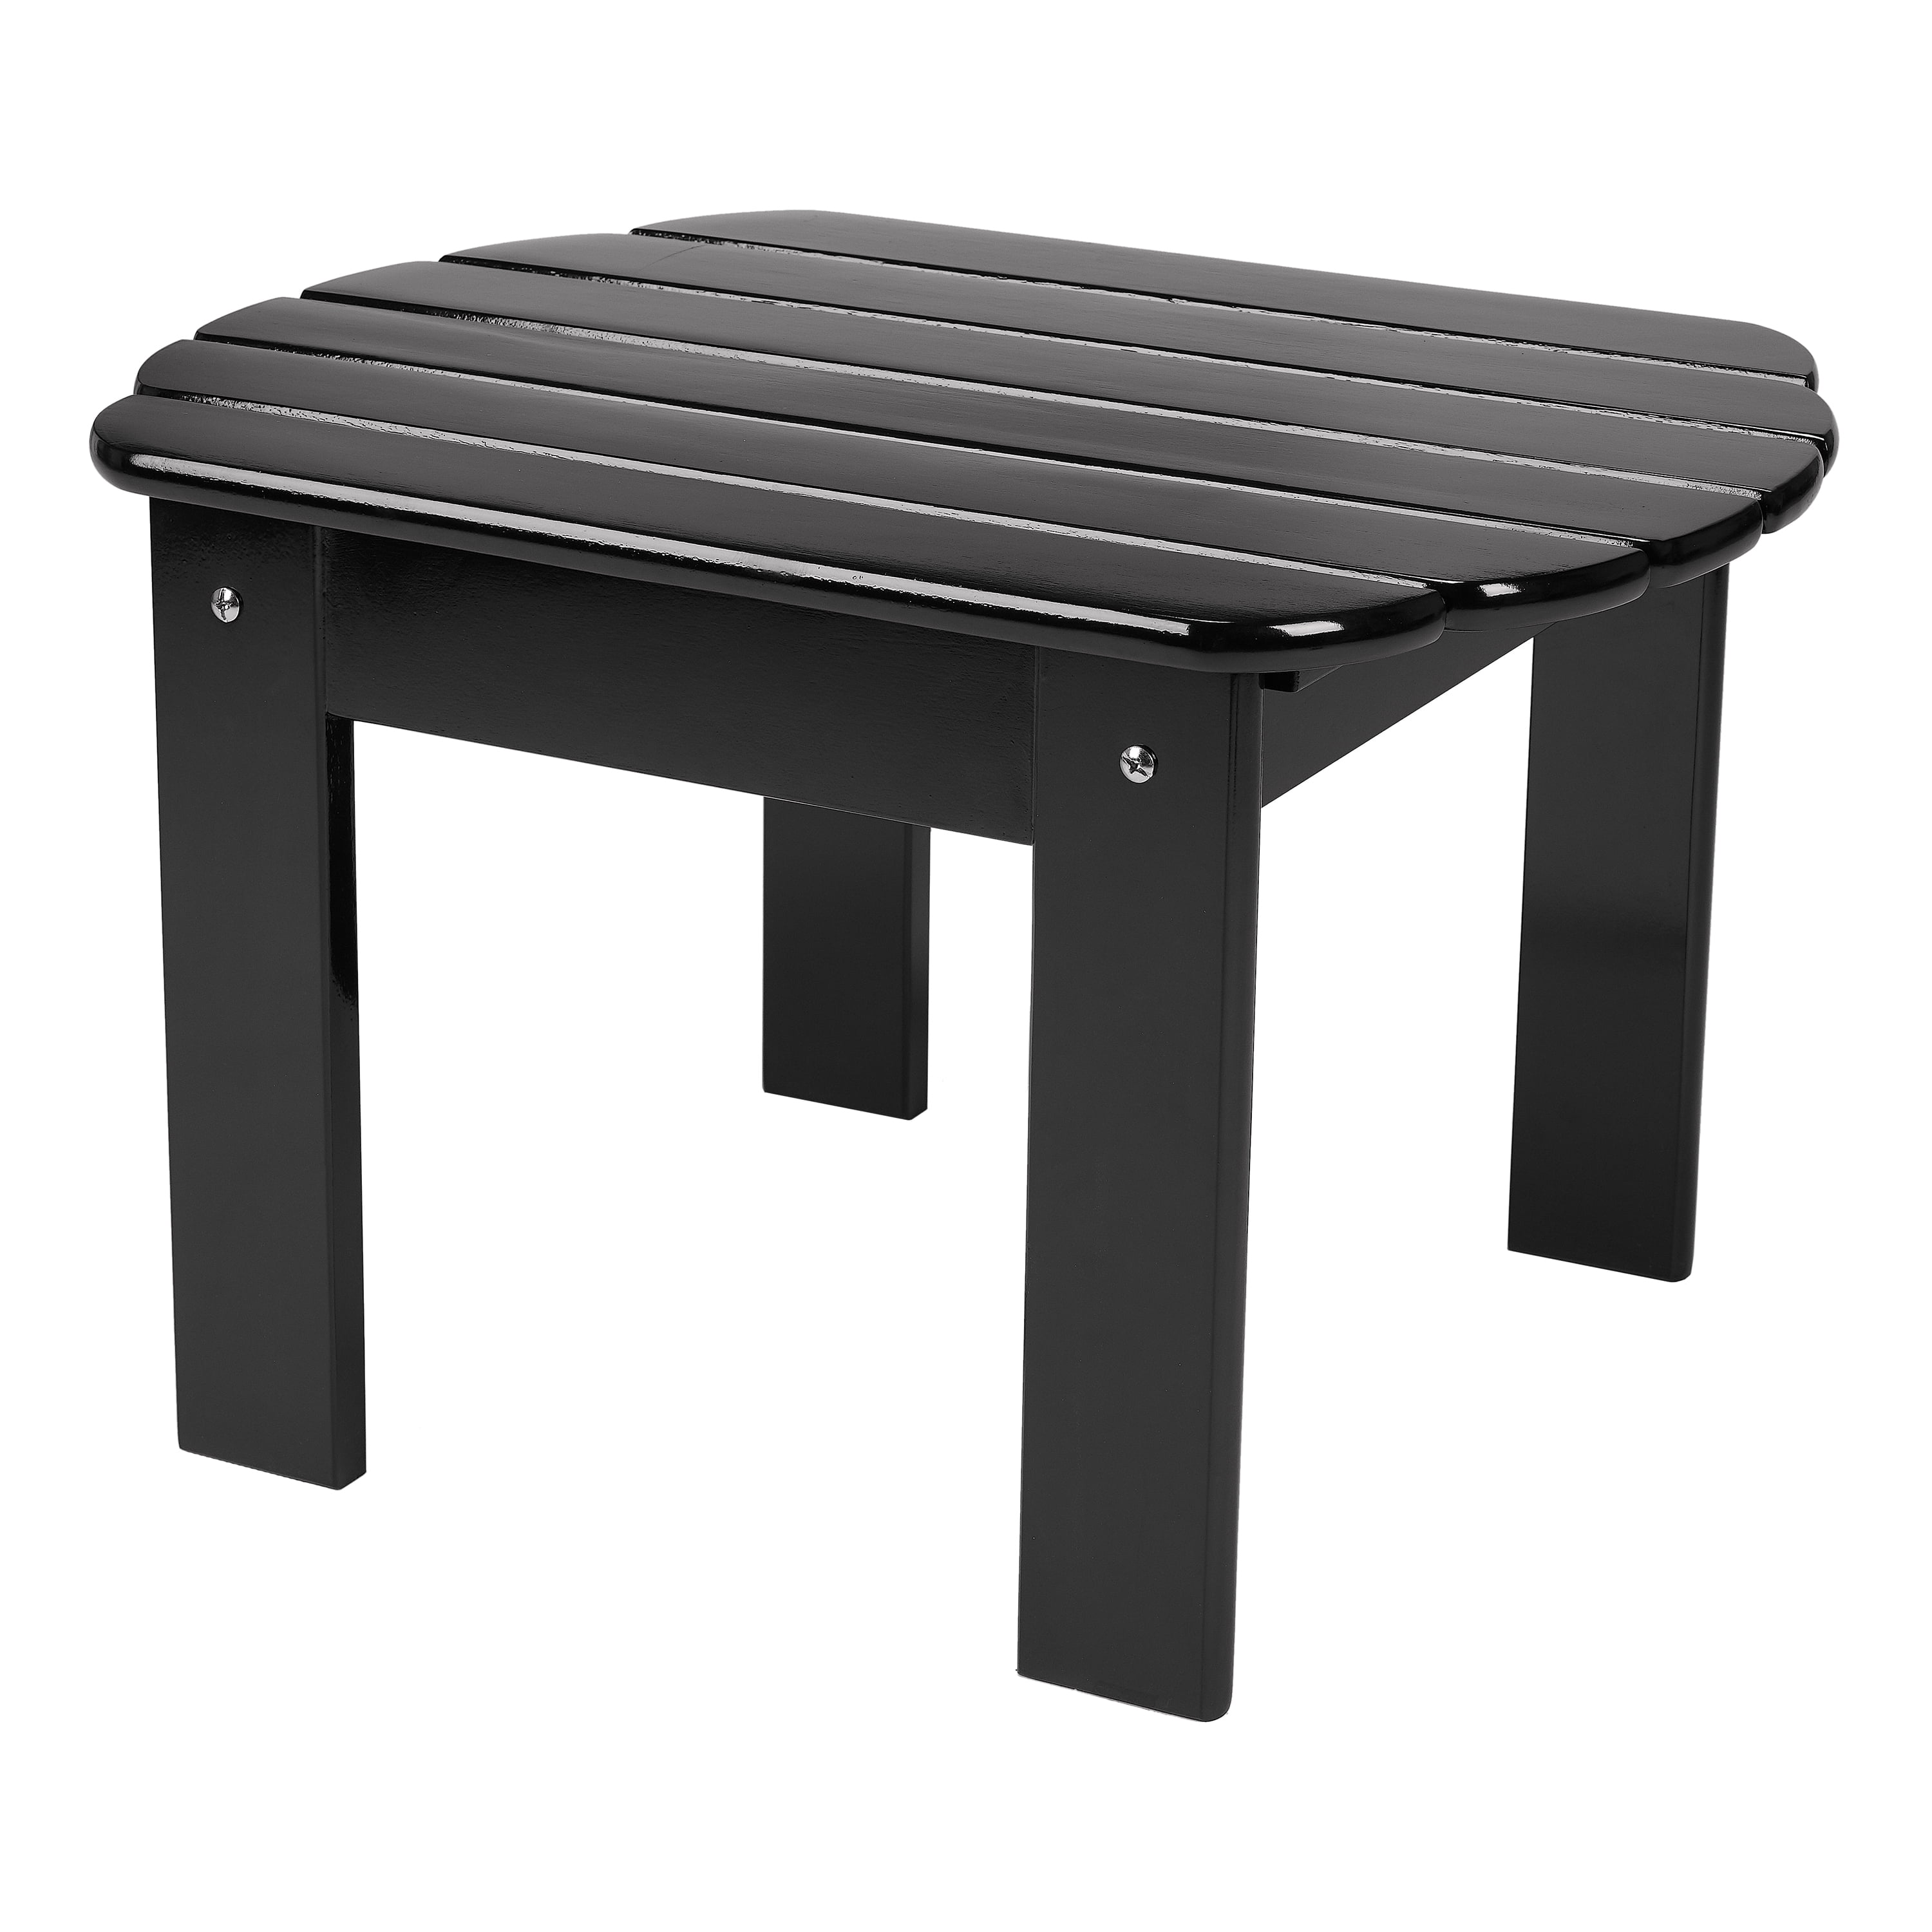 Mainstays wood adirondack outdoor side table